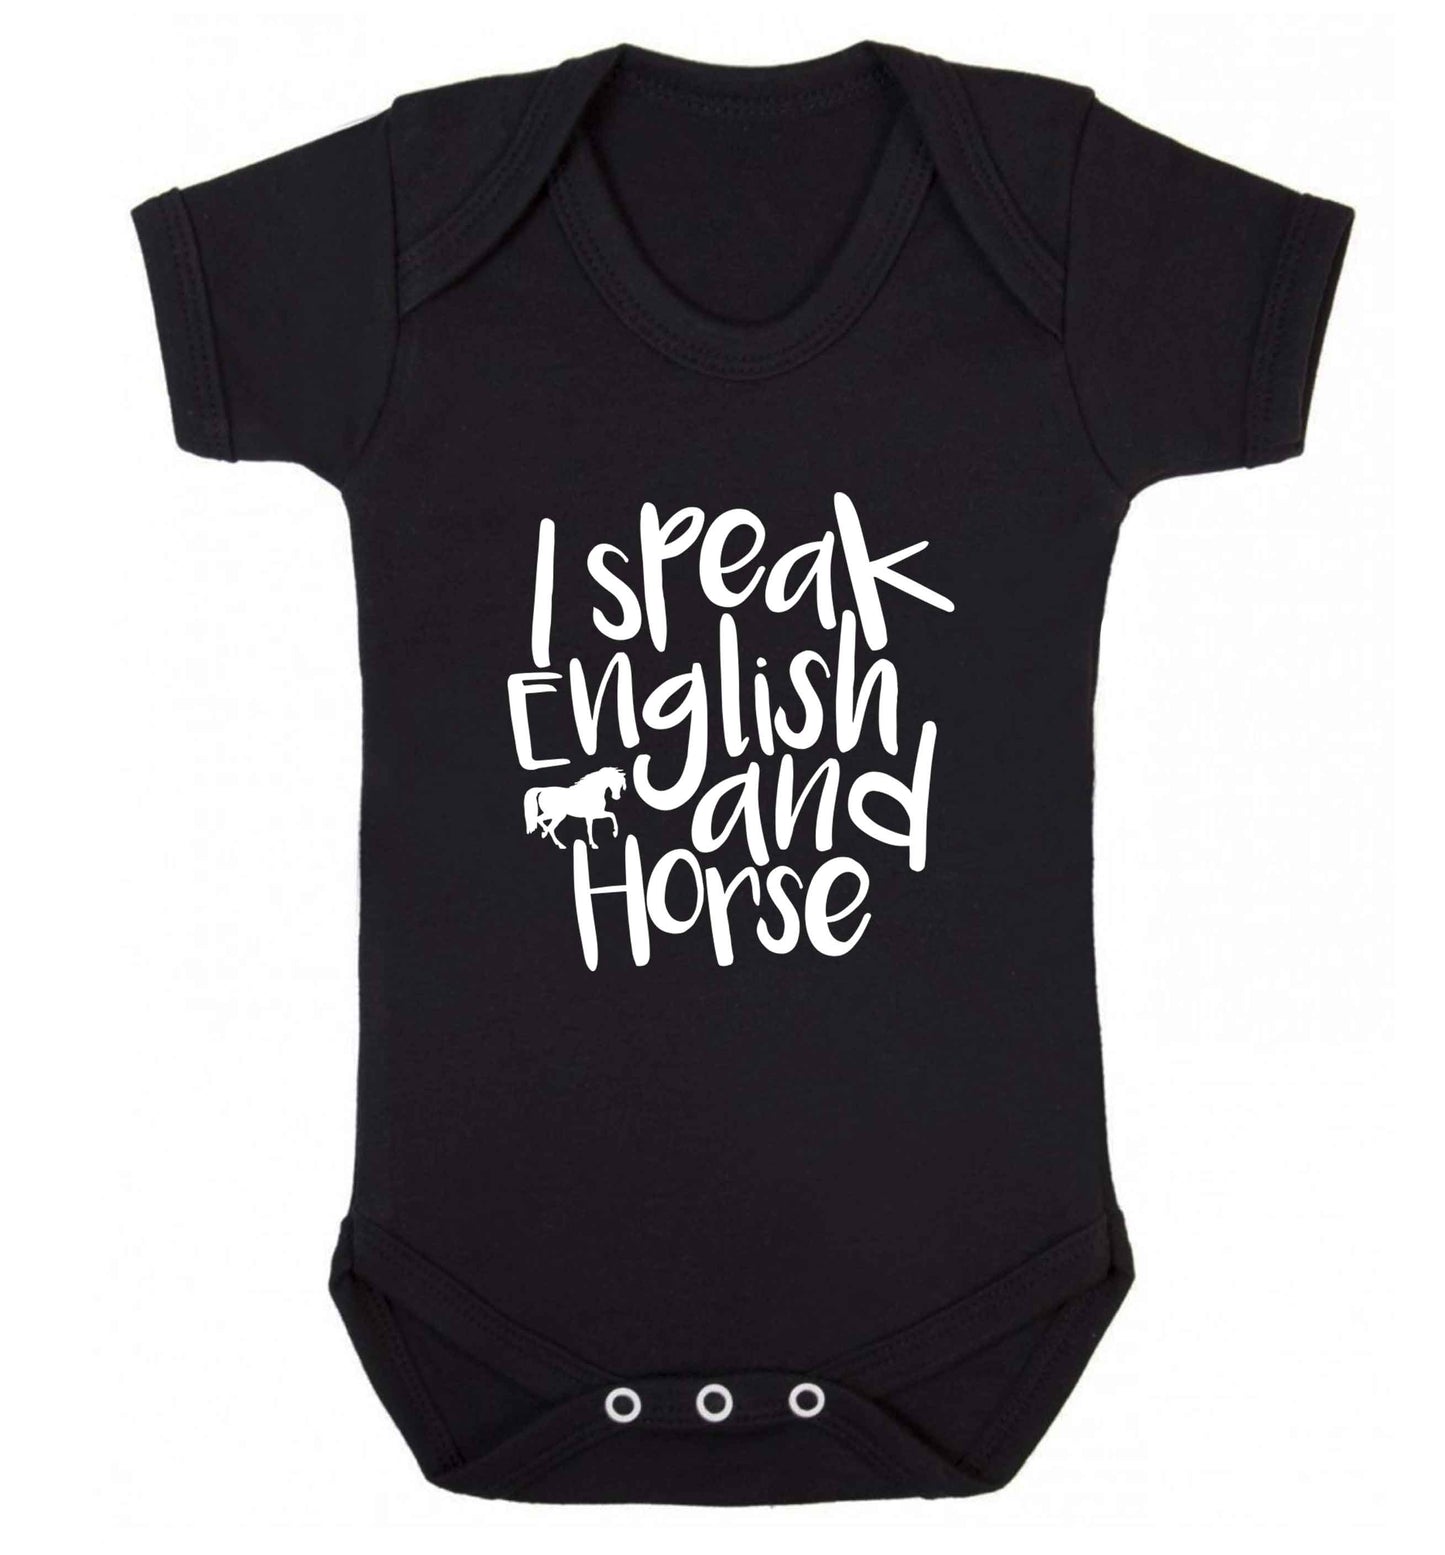 I speak English and horse baby vest black 18-24 months